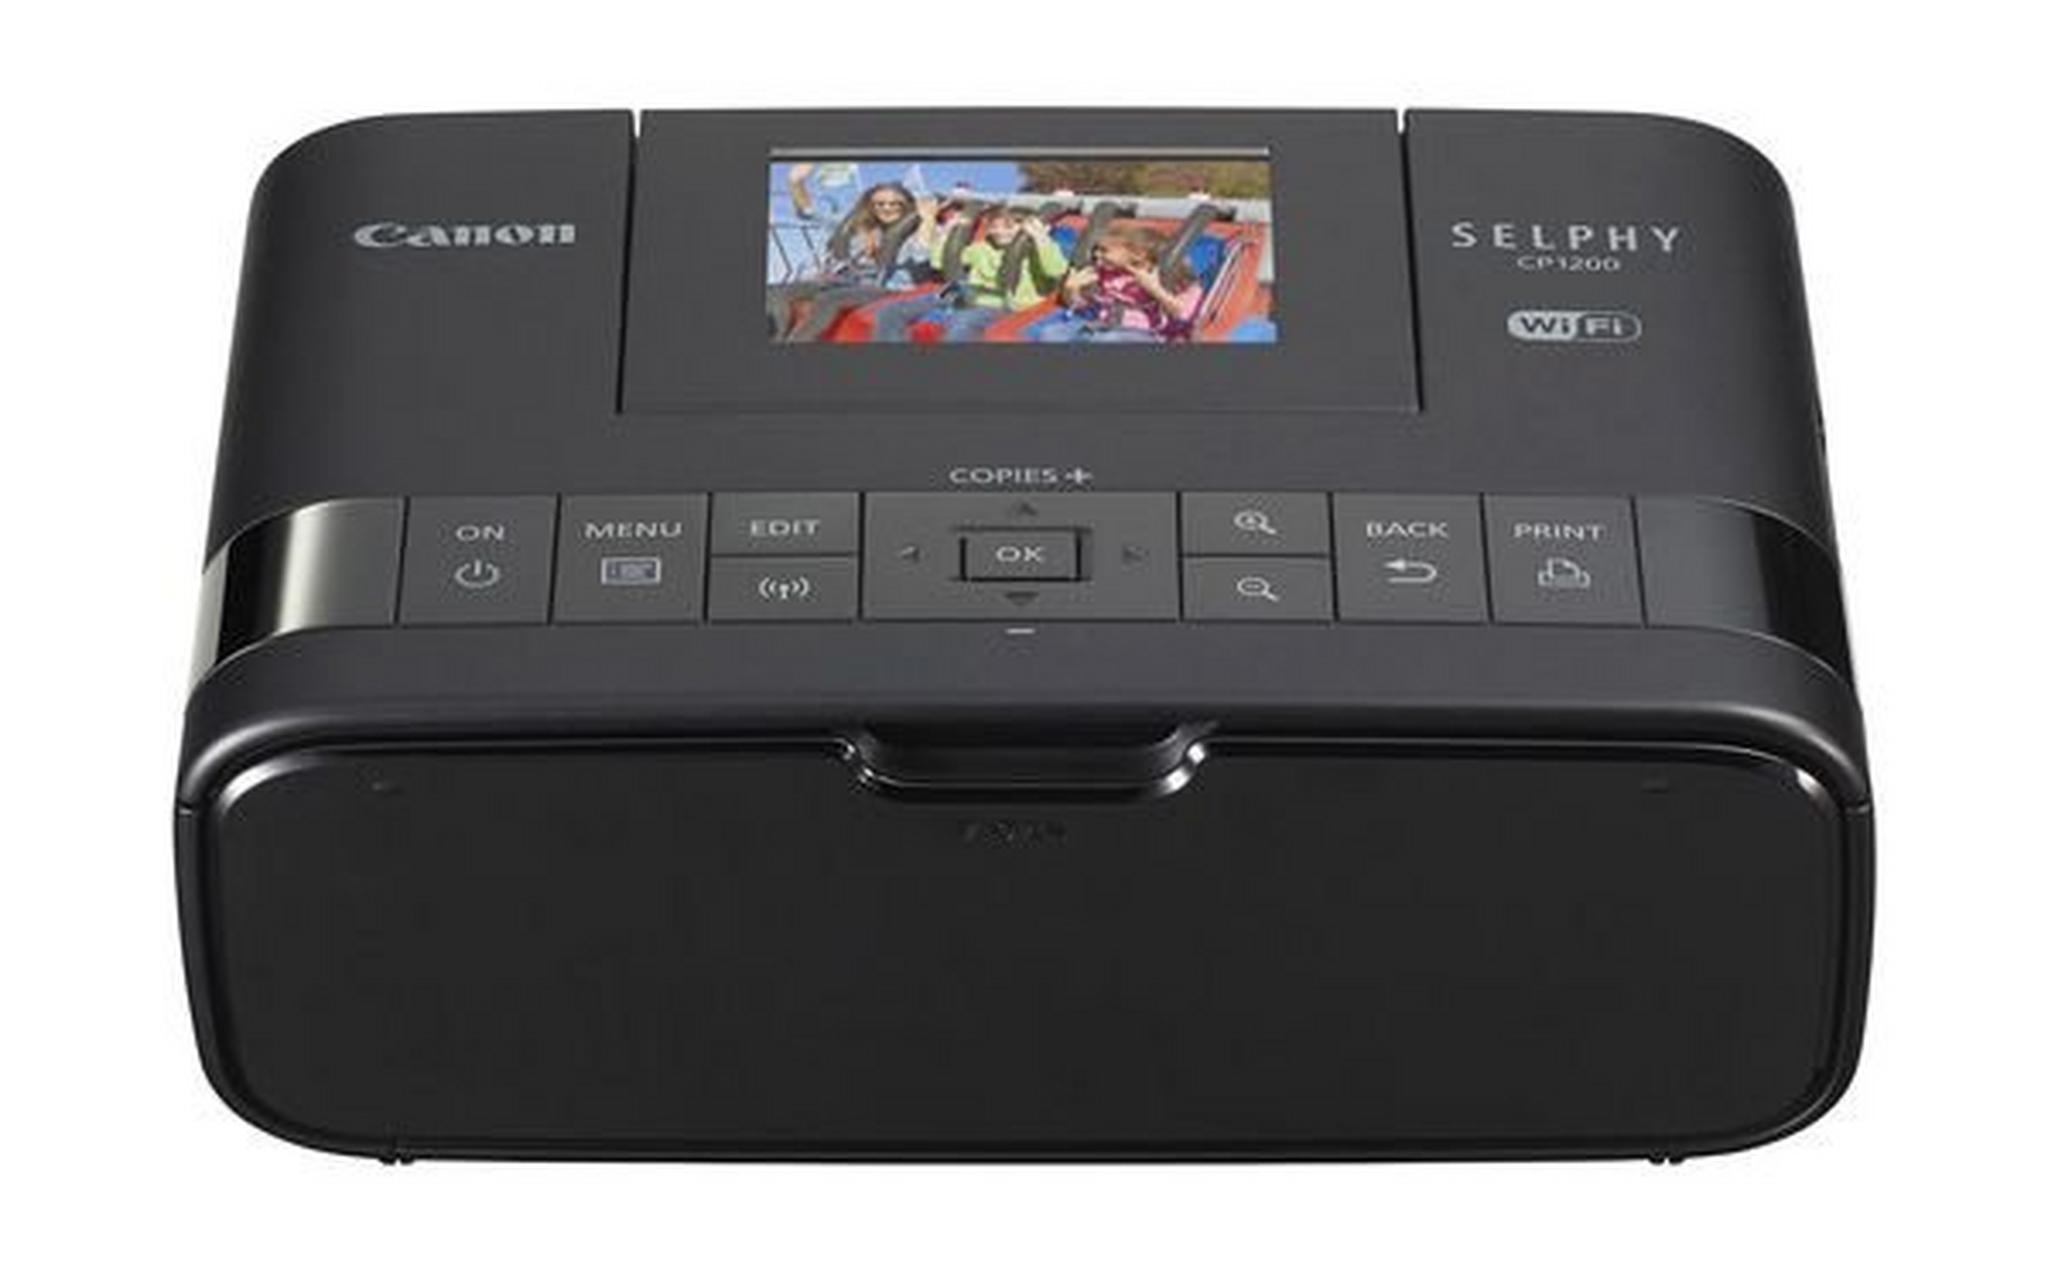 Canon SELPHY Wireless Compact Photo Printer (CP1200) – Black